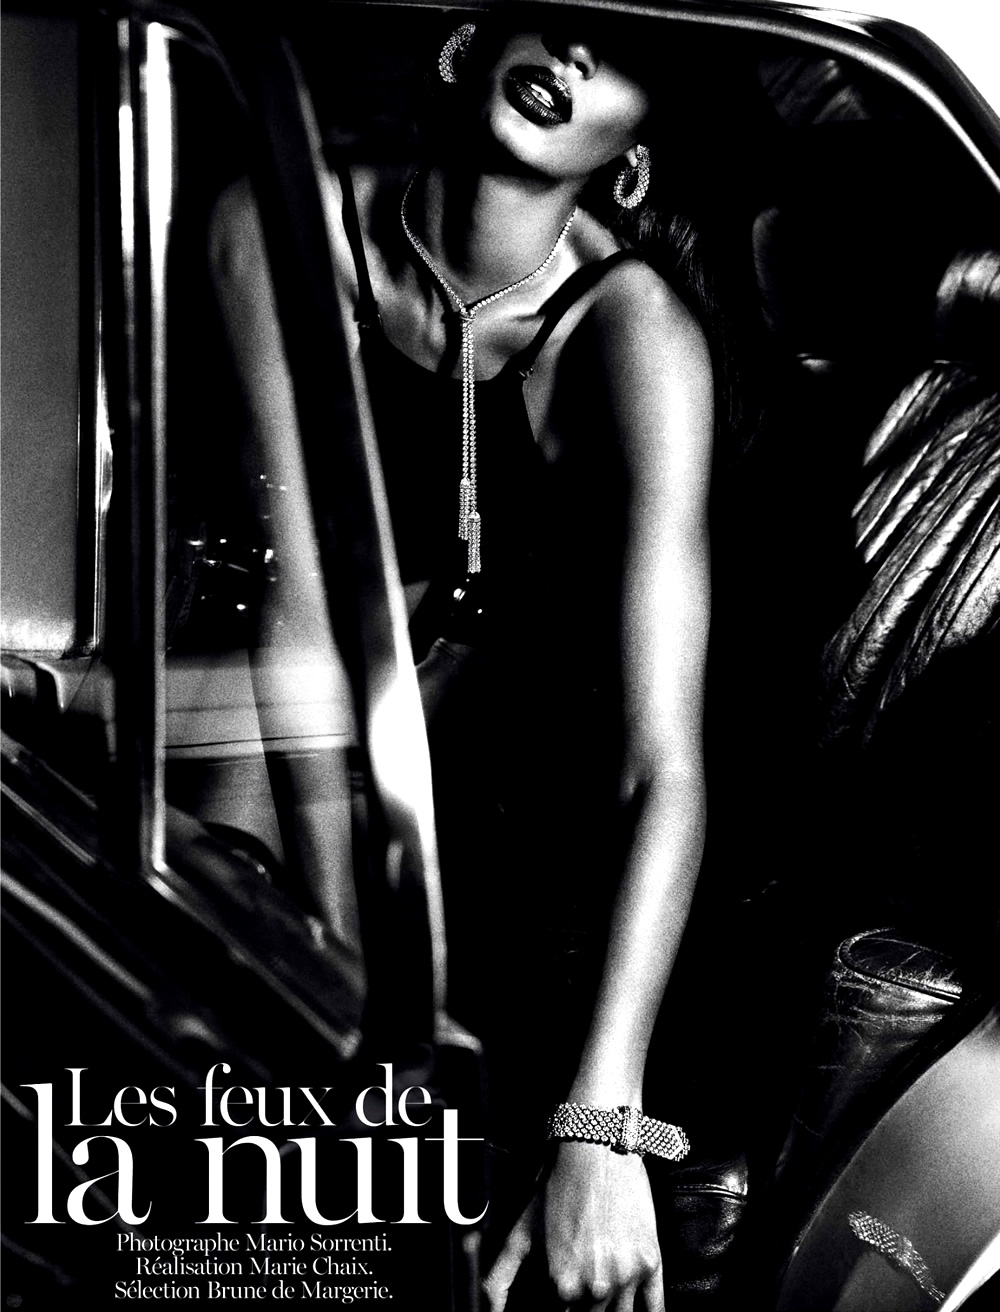 Joan Smalls by Mario Sorrenti for Vogue Paris